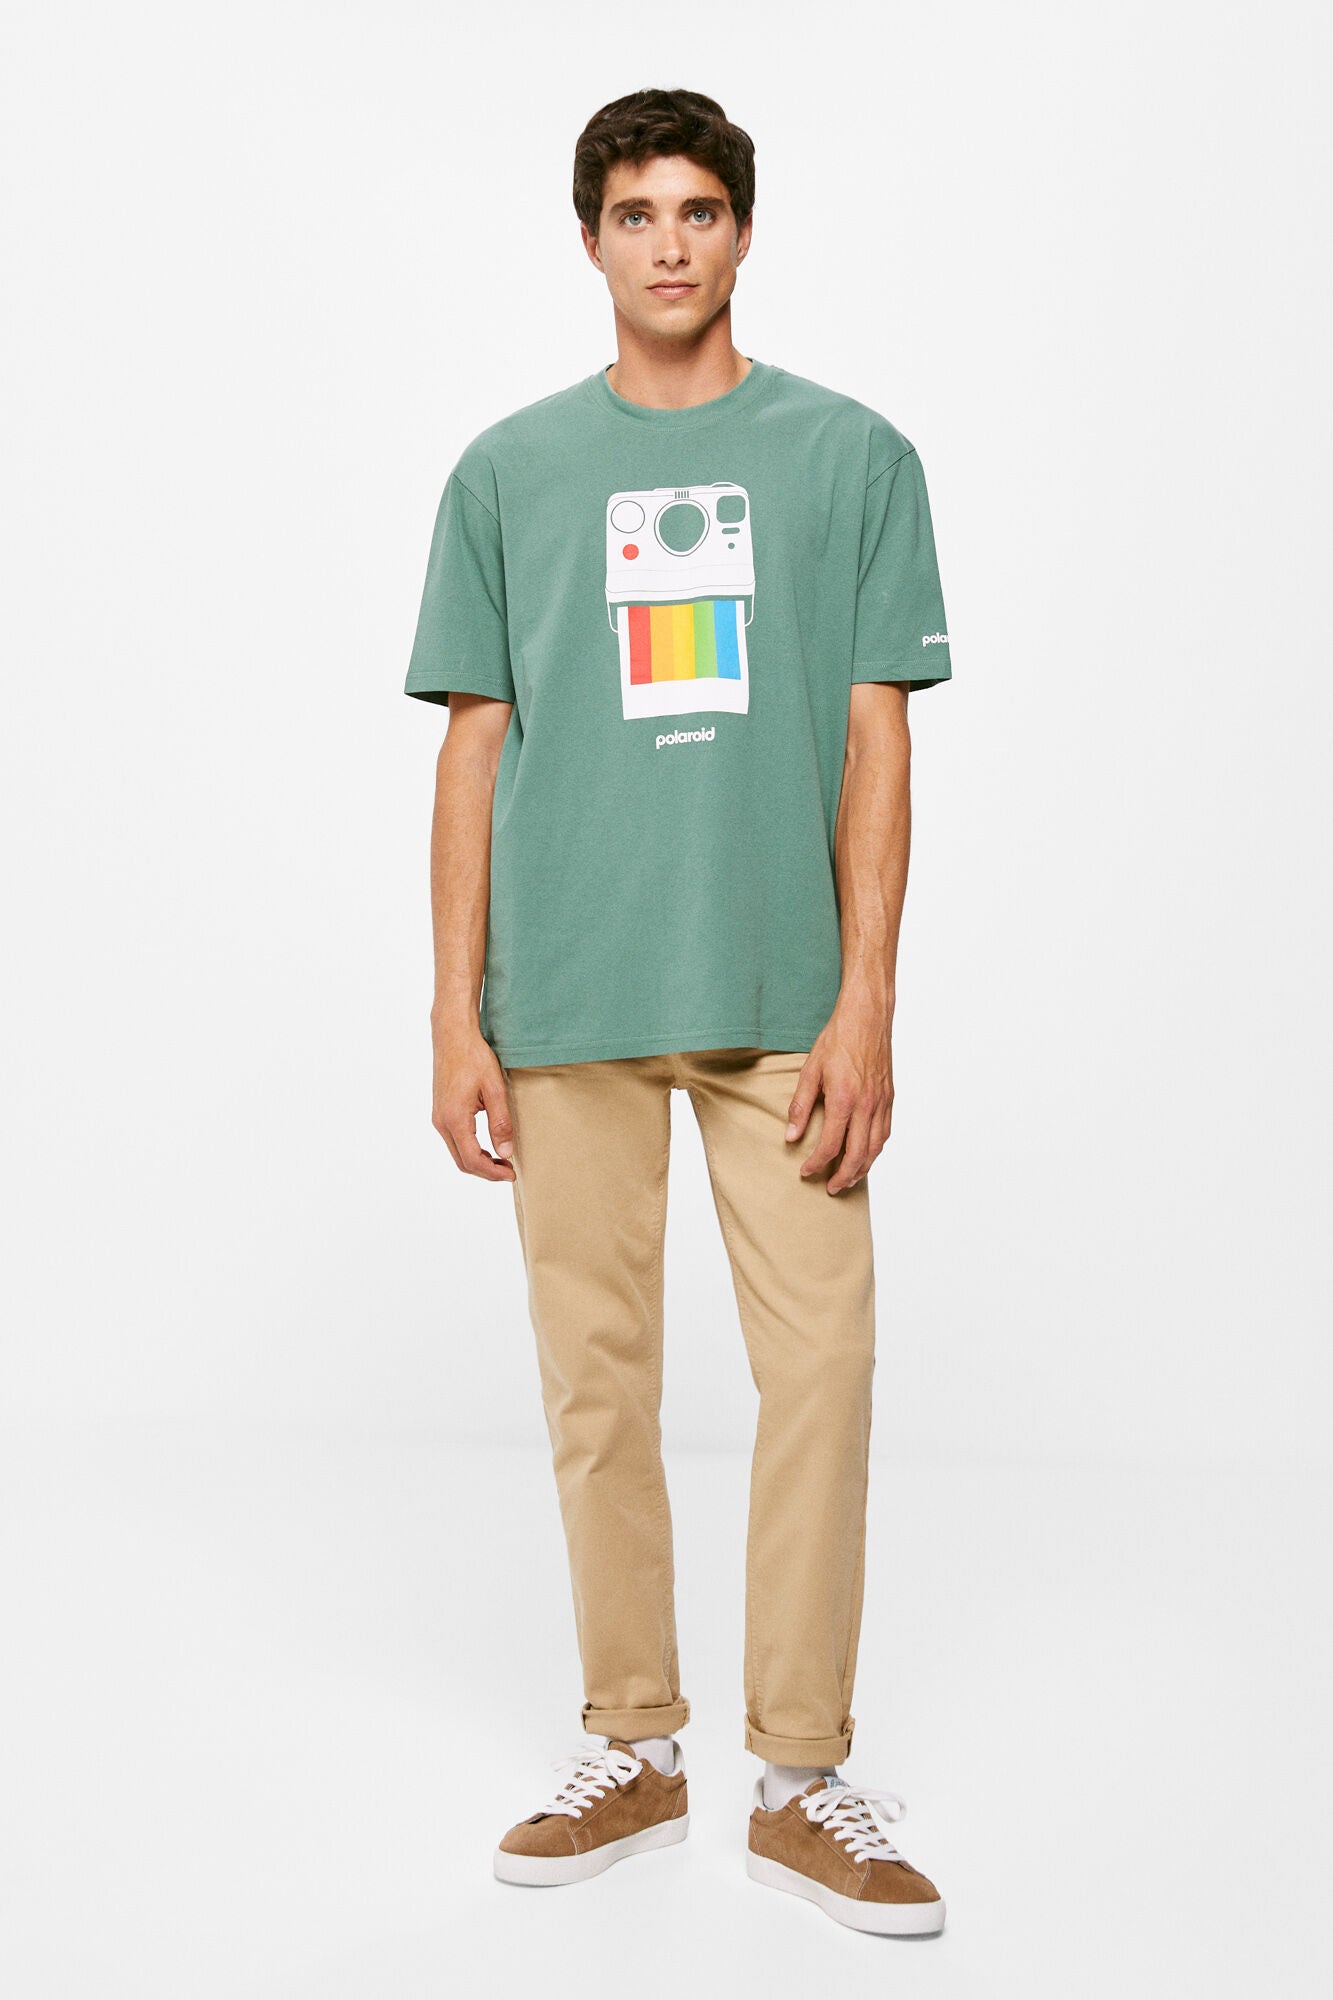 Polaroid T-shirt (Regular Fit)